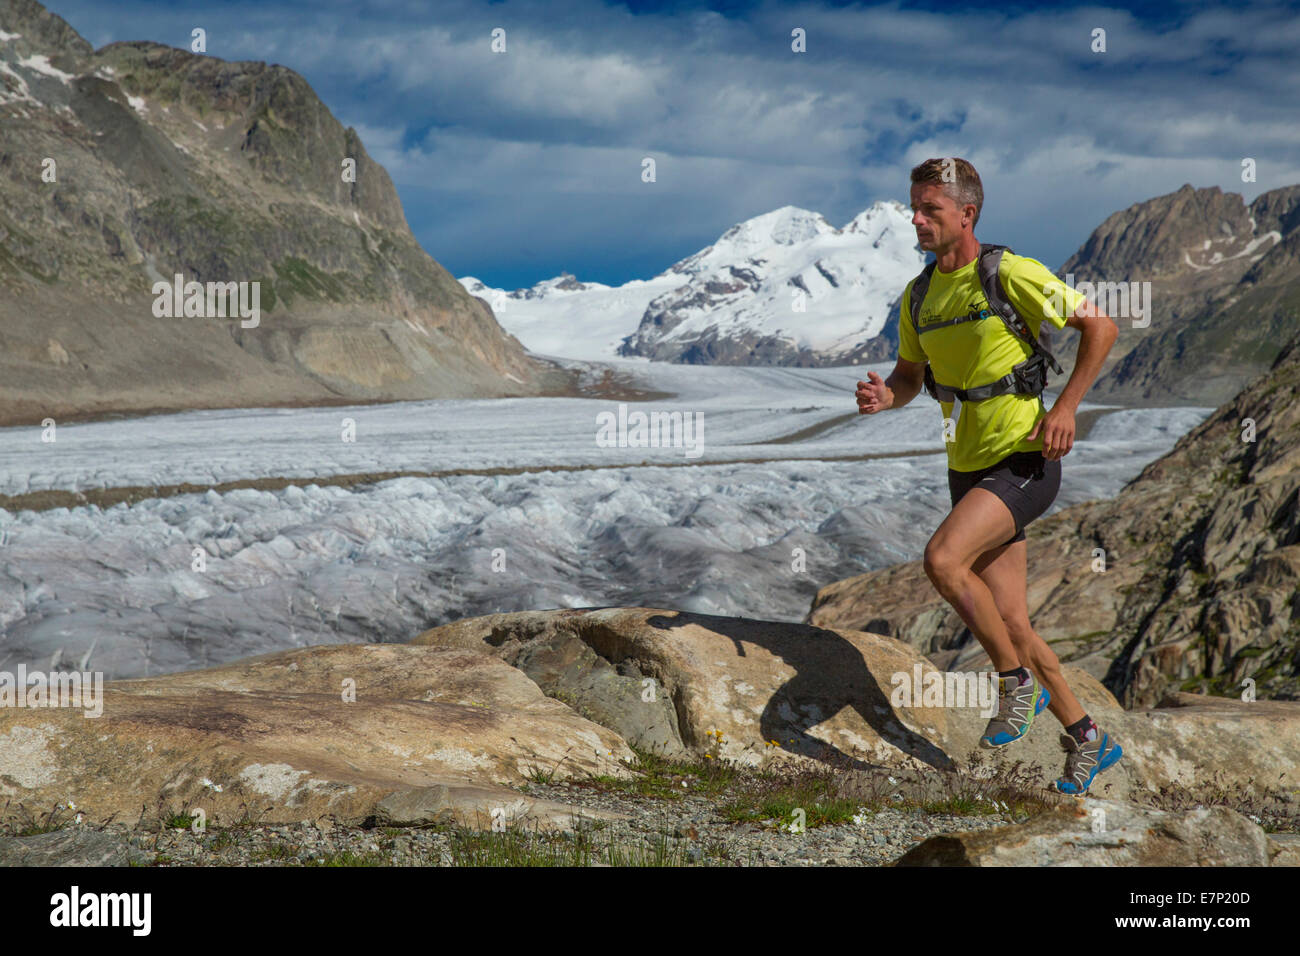 Eggishorn, runner, Aletsch glacier, mountain, mountains, glacier, ice, moraine, summer sport, spare time, adventure, canton, VS, Stock Photo